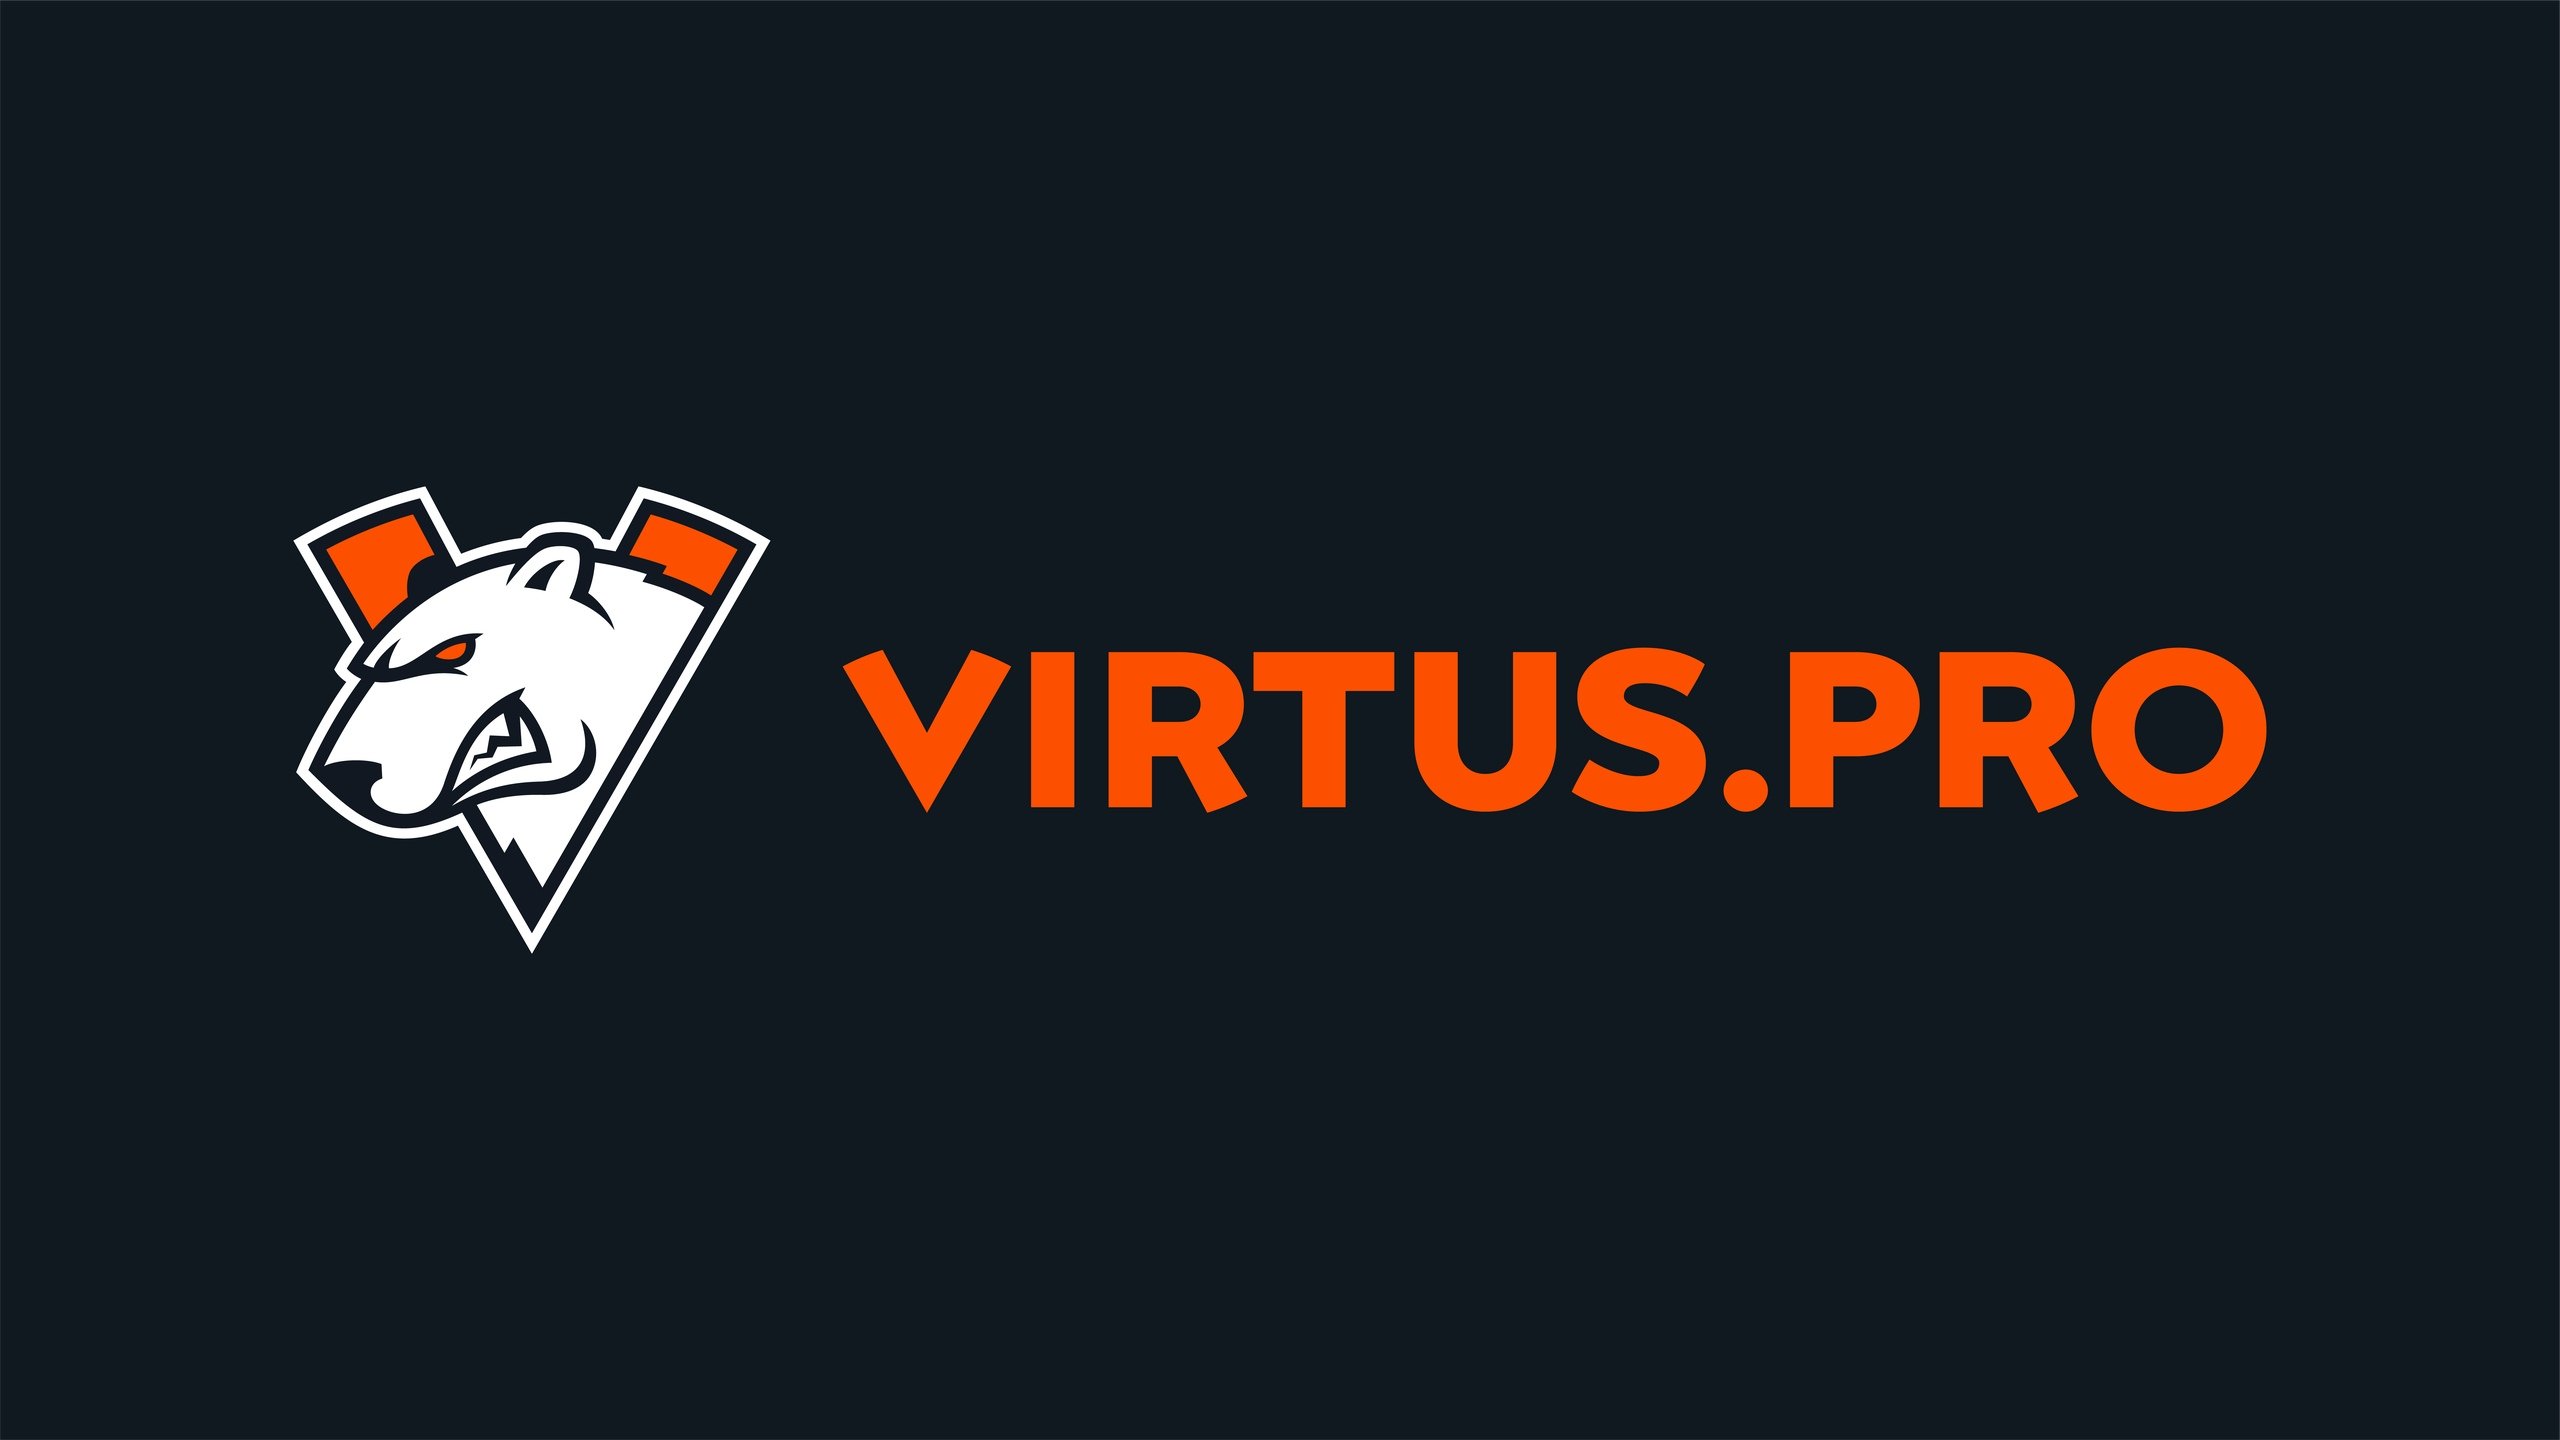 StrangeR, Ahilles и 4SV вошли в штаб Virtus.pro по Dota 2